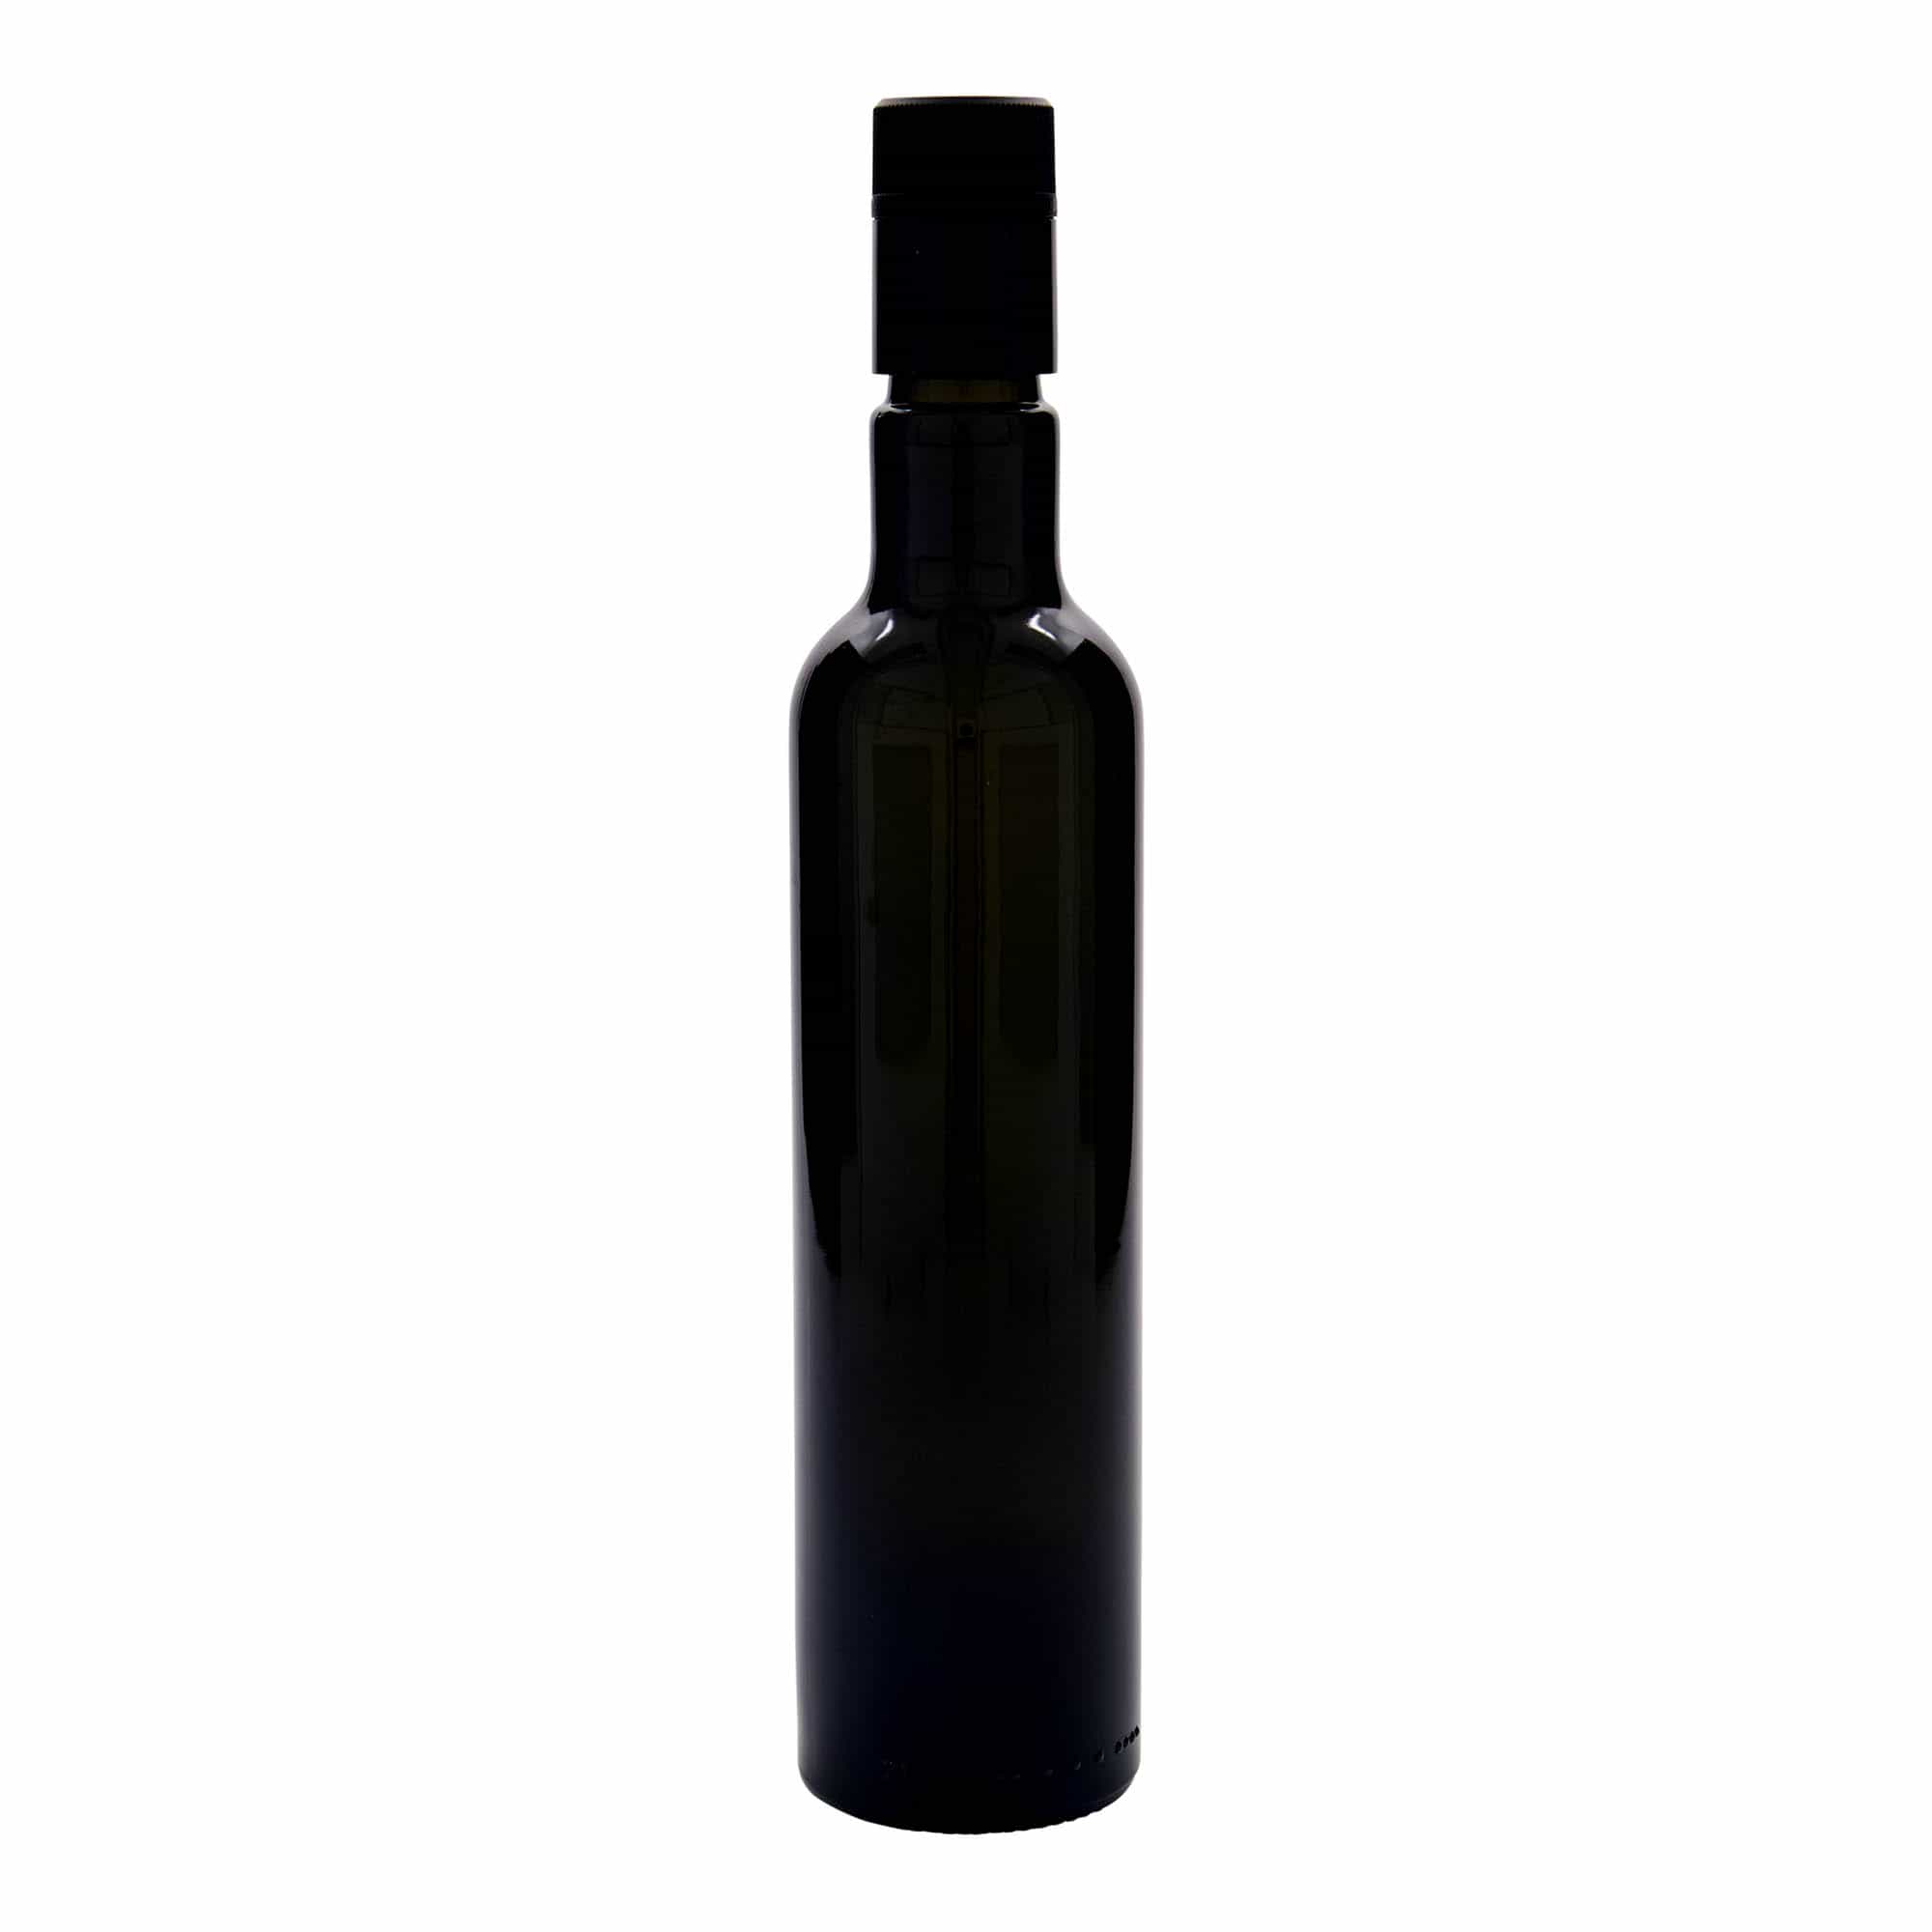 Bouteille de vinaigre / d’huile 500 ml 'Willy New', verre, vert antique, bouchage: DOP